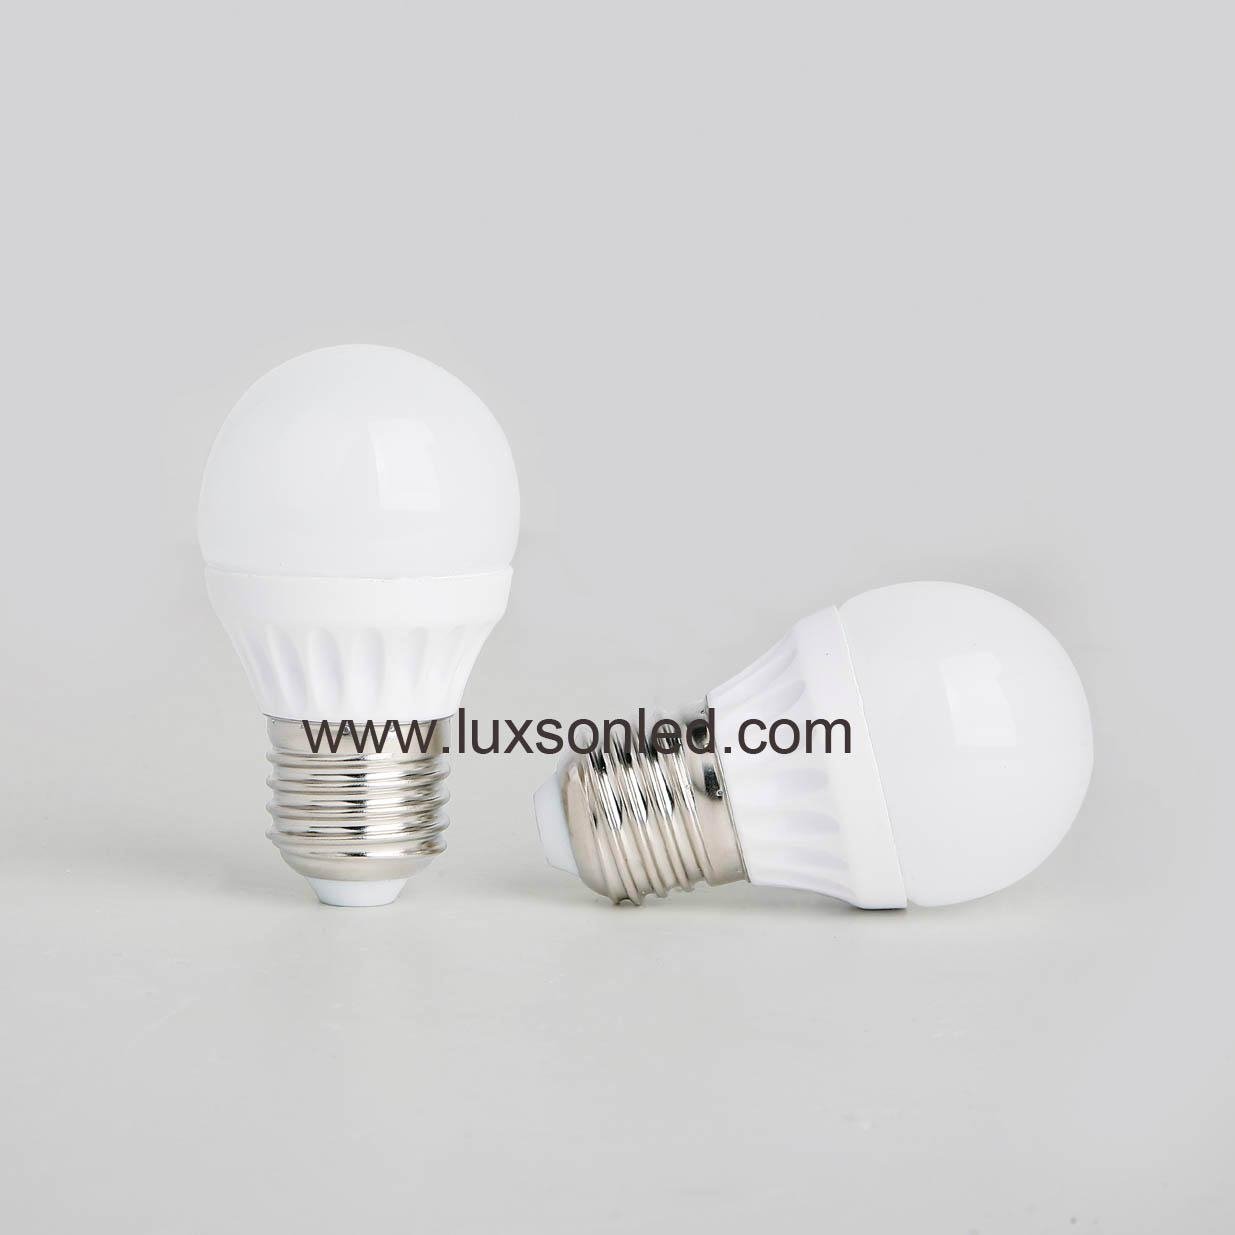 LED Bulb  G45  LED  Lamp  Light